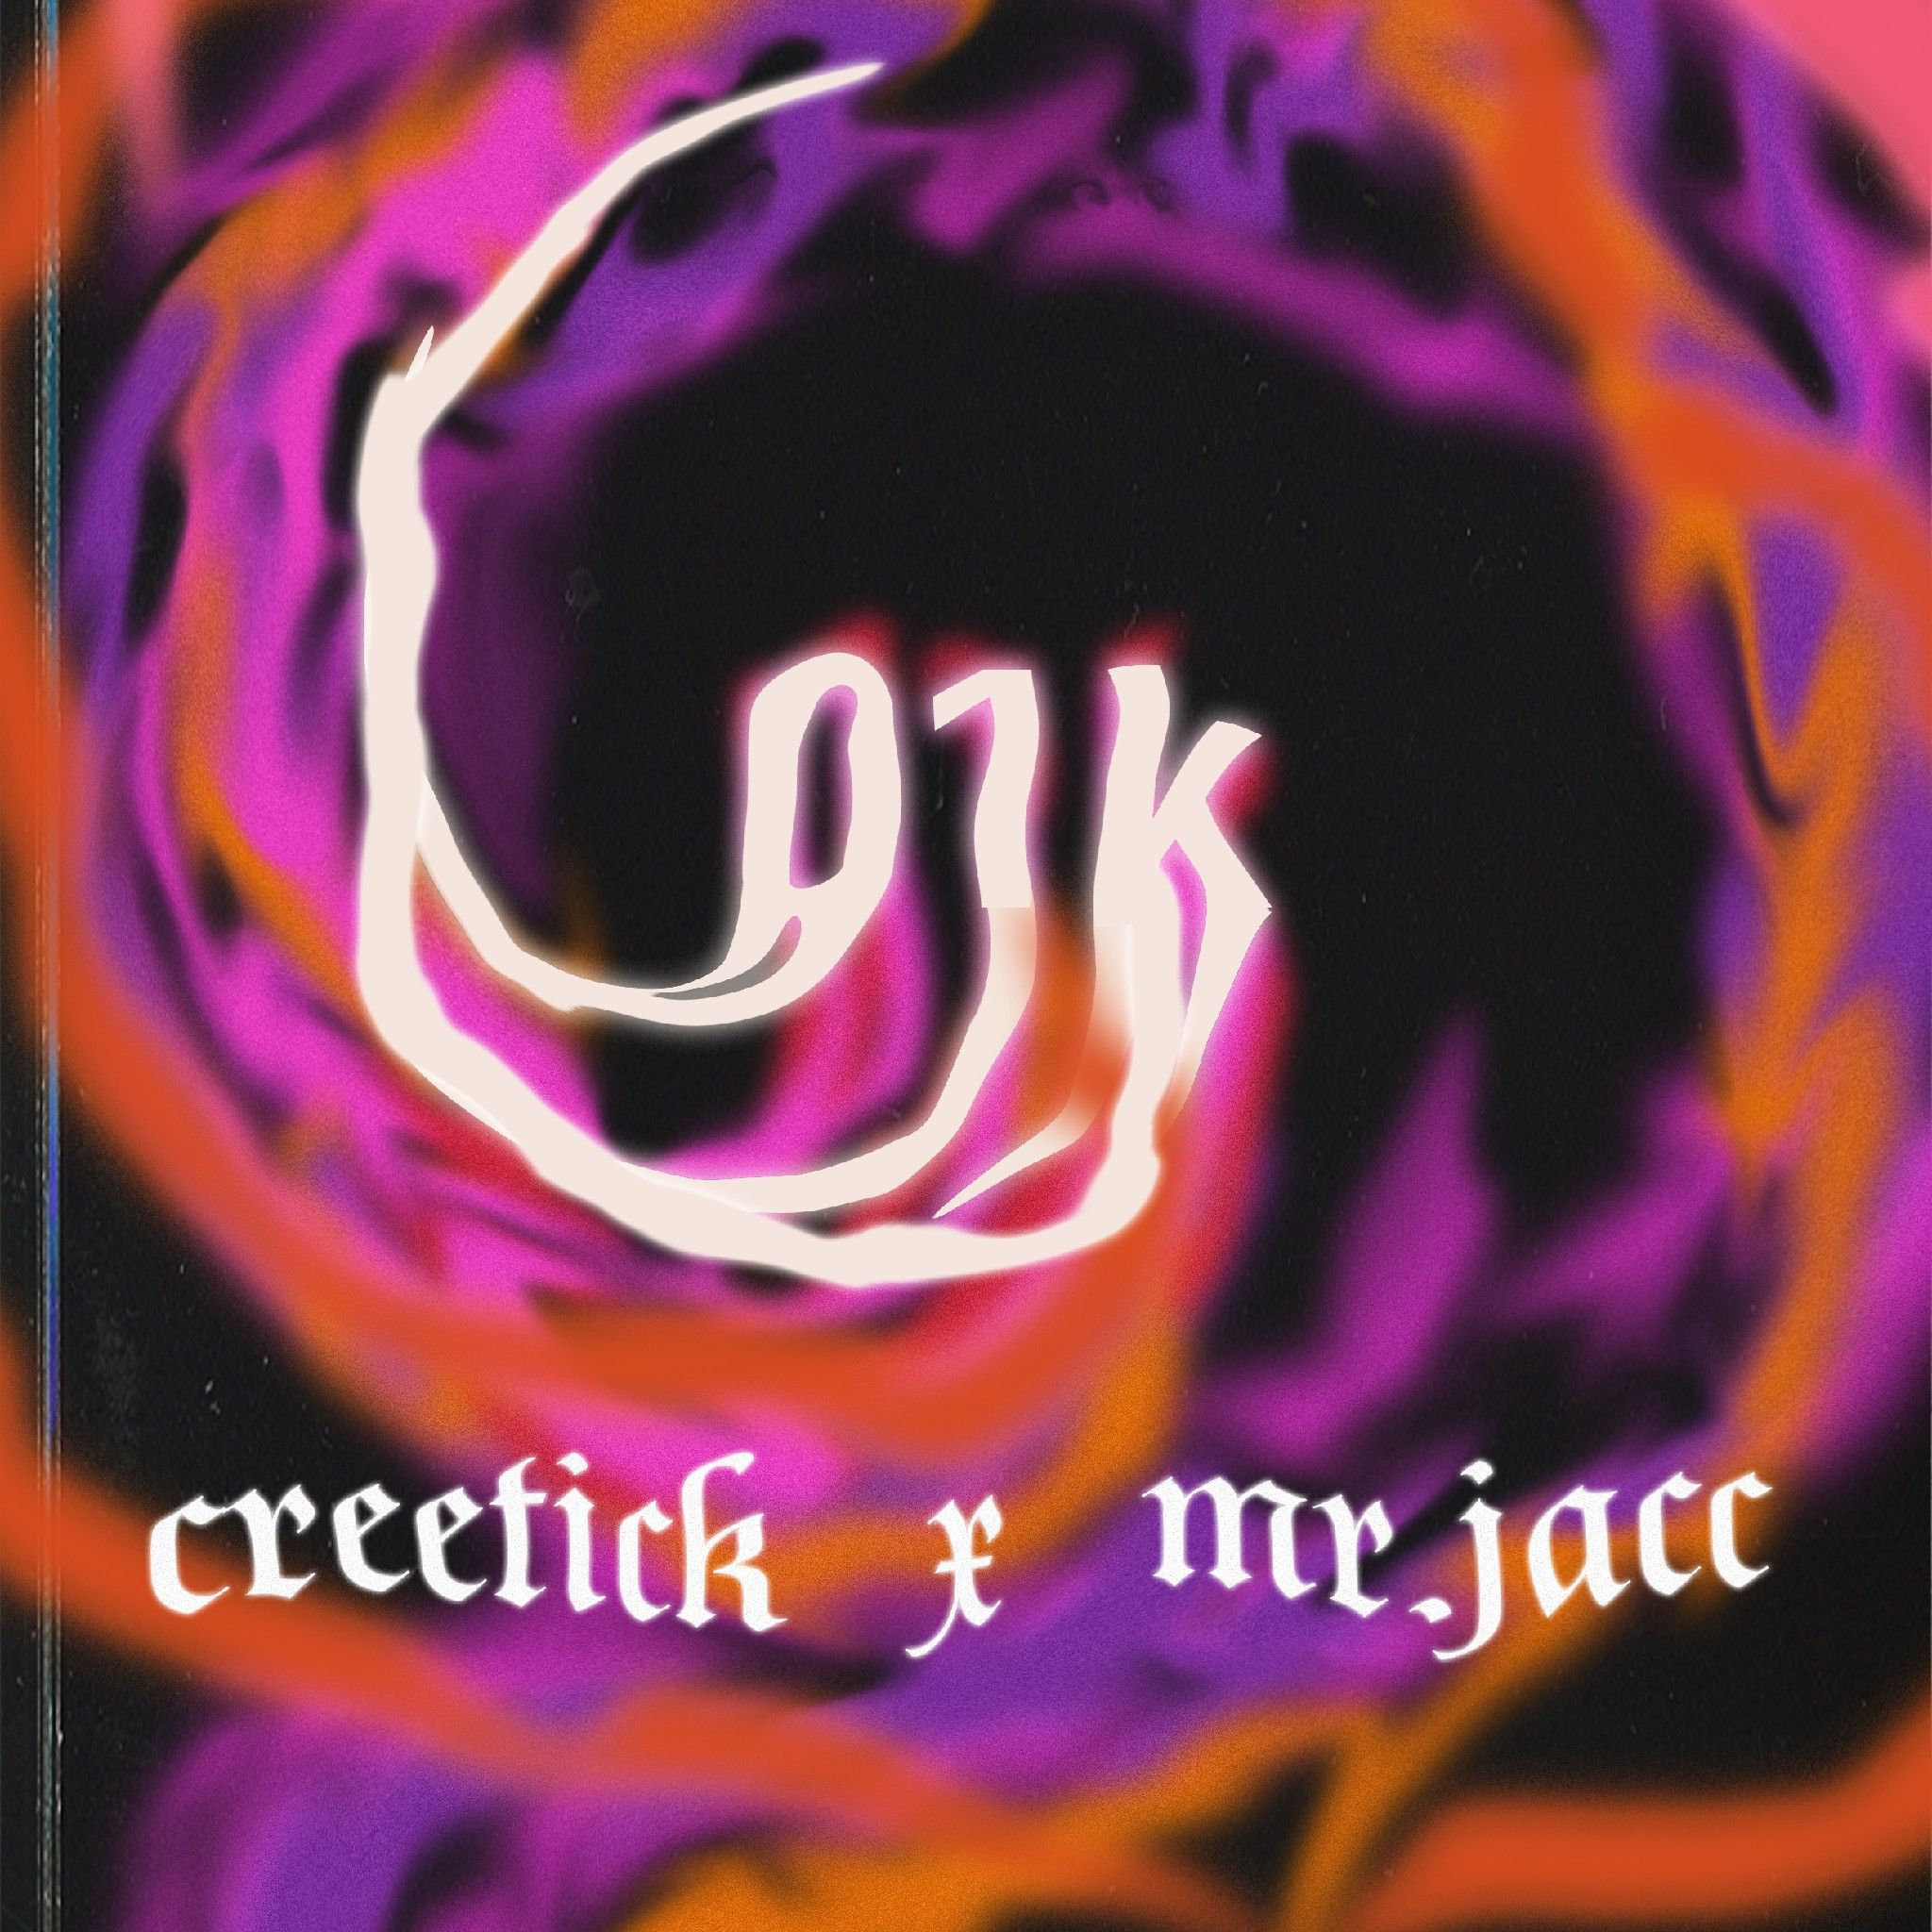 I-download 01K w/ Creetick